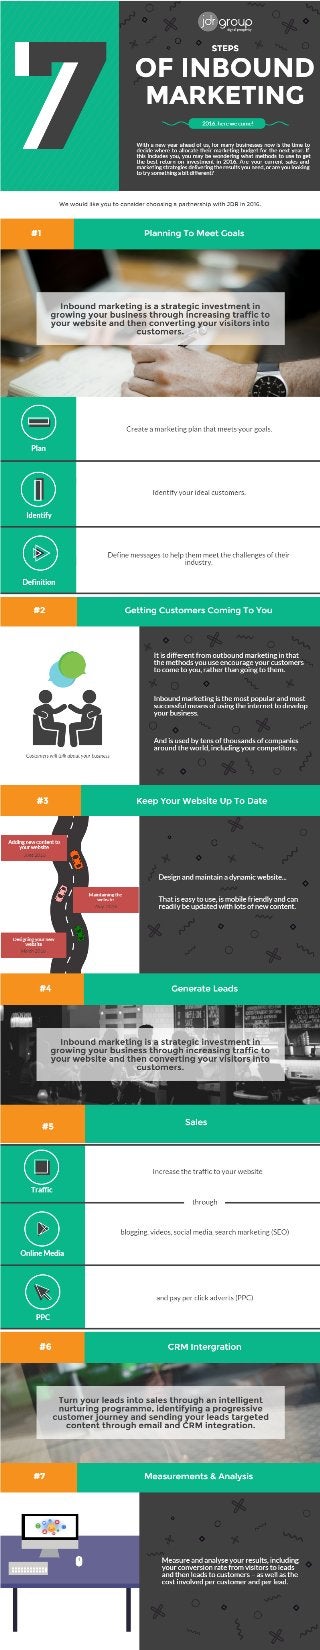 7 steps of inbound marketing infographic